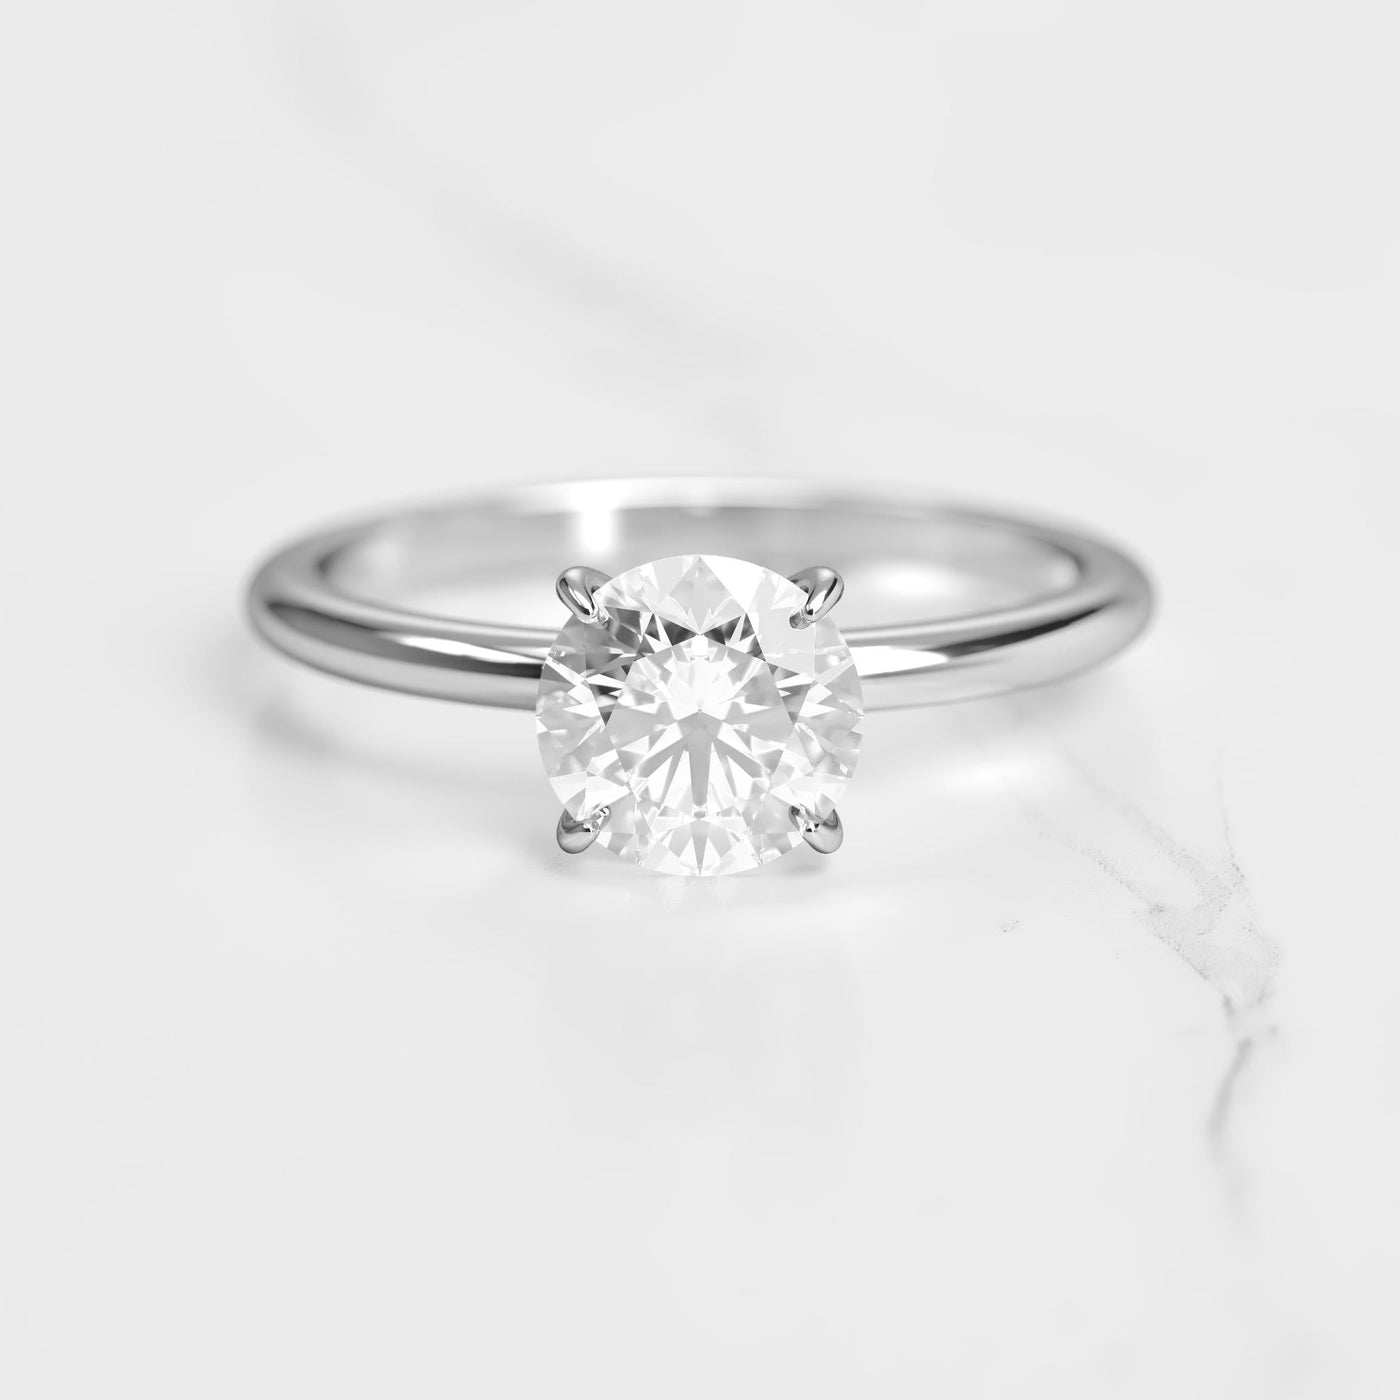 Round tapered solitaire diamond ring